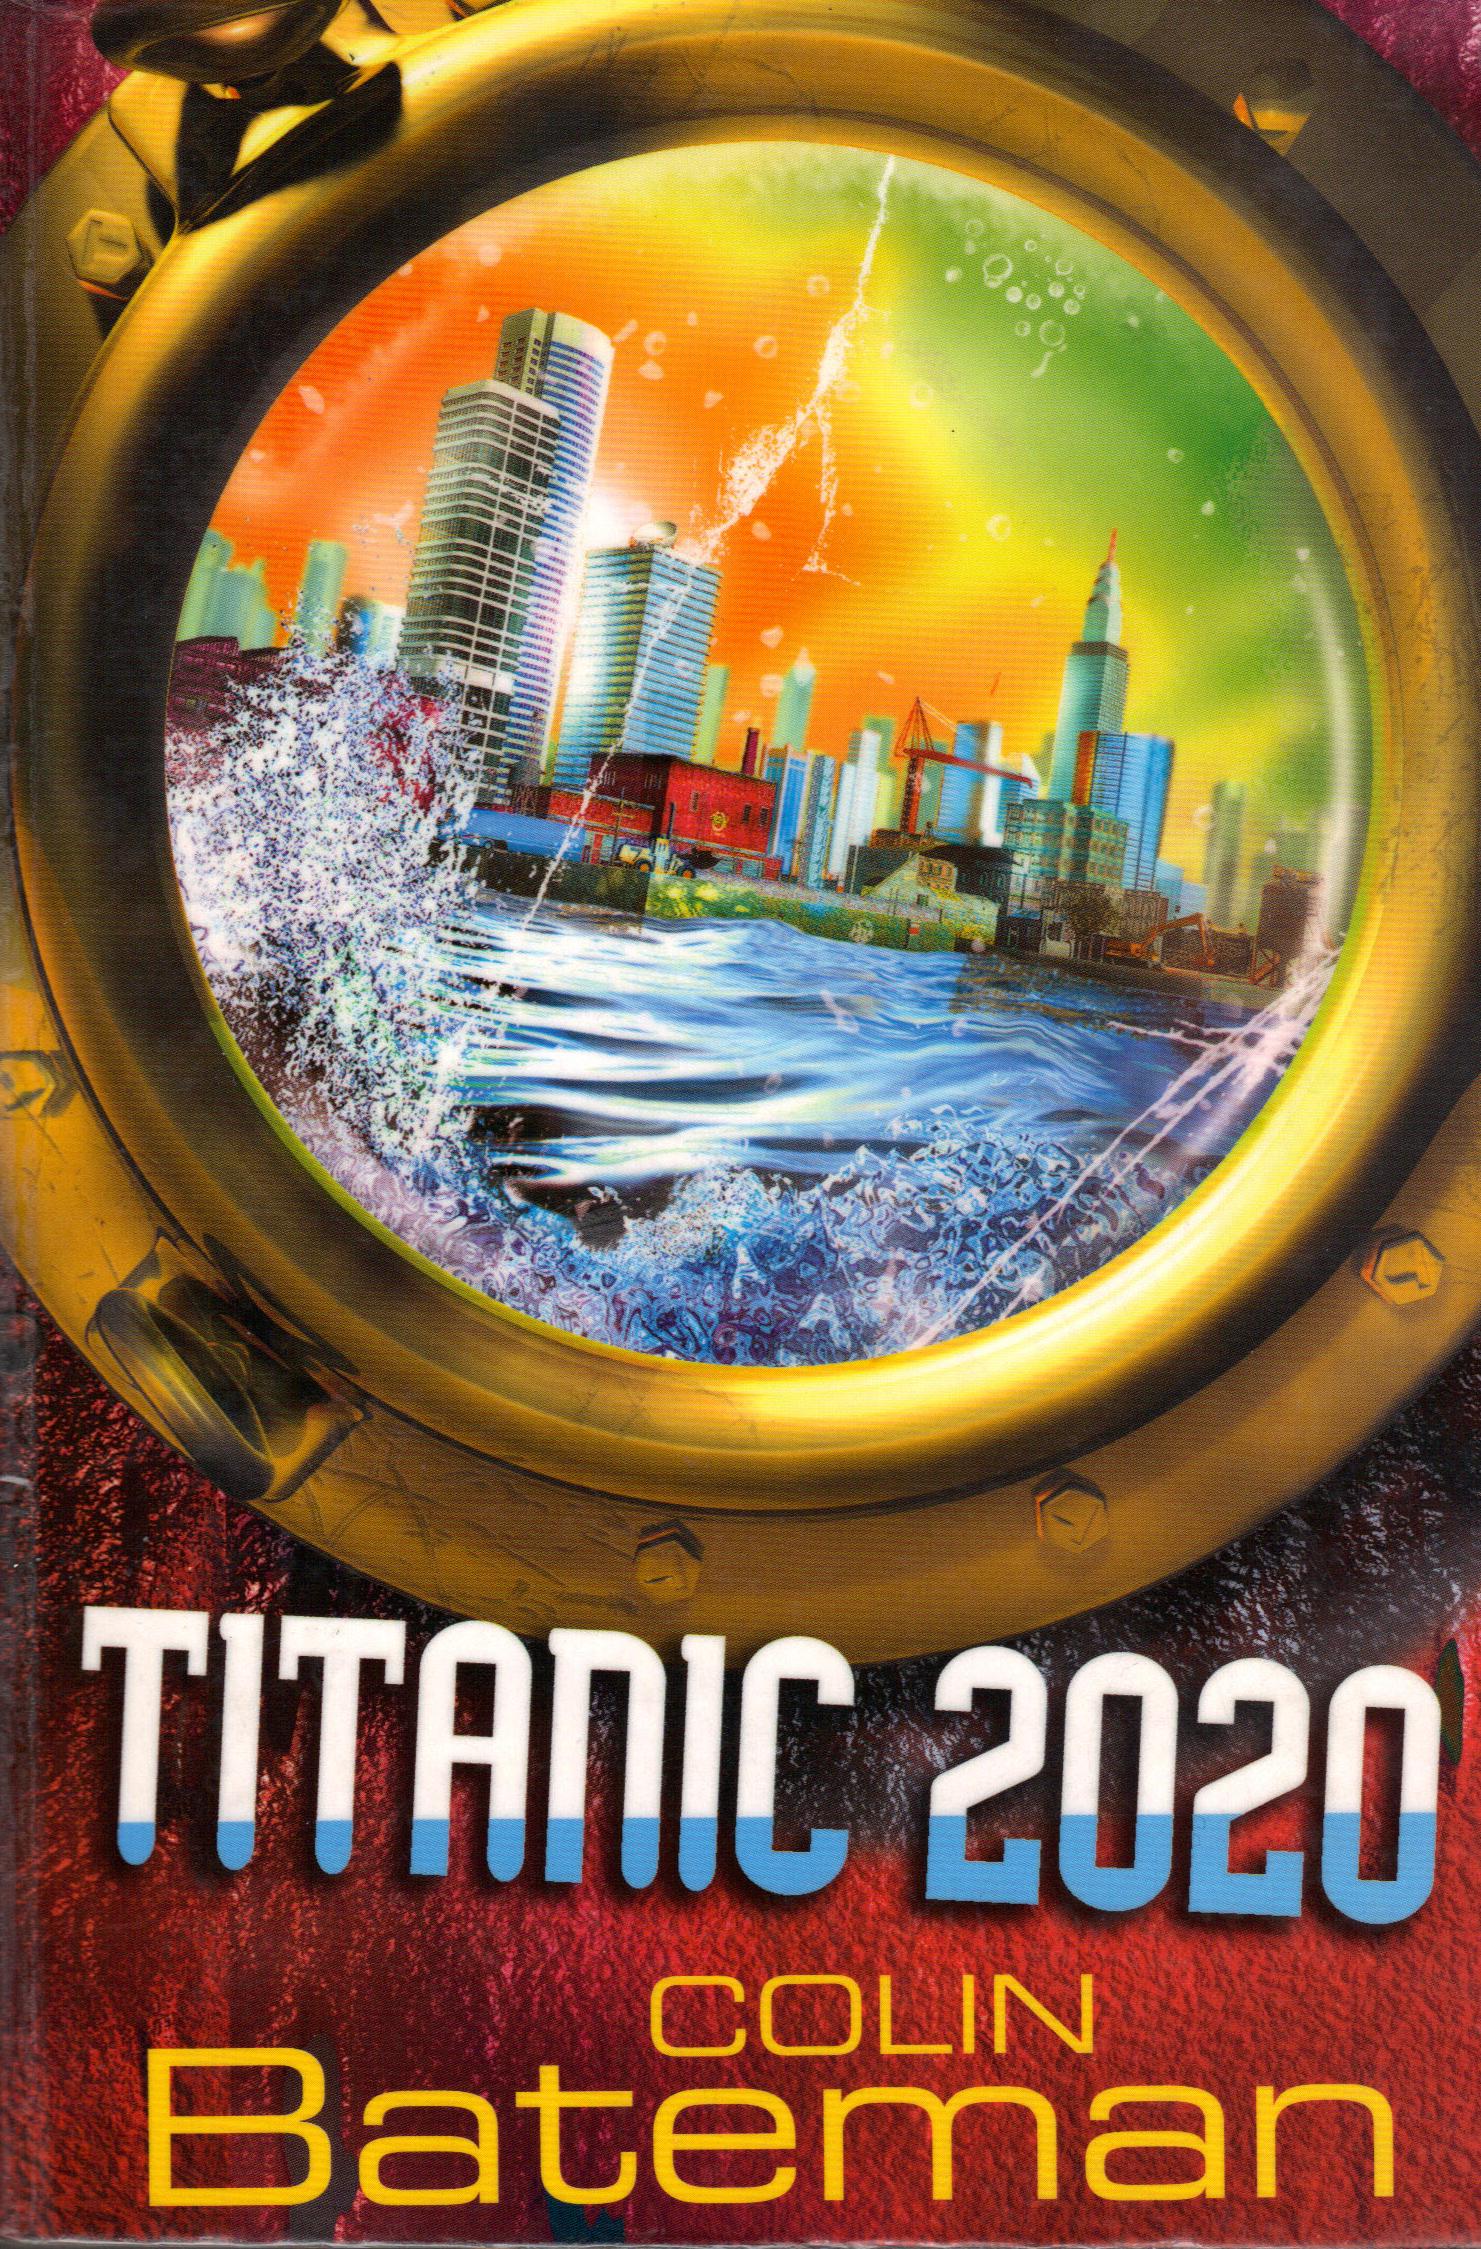 Titanic 2020 - Бейтман Колин скачать fb2